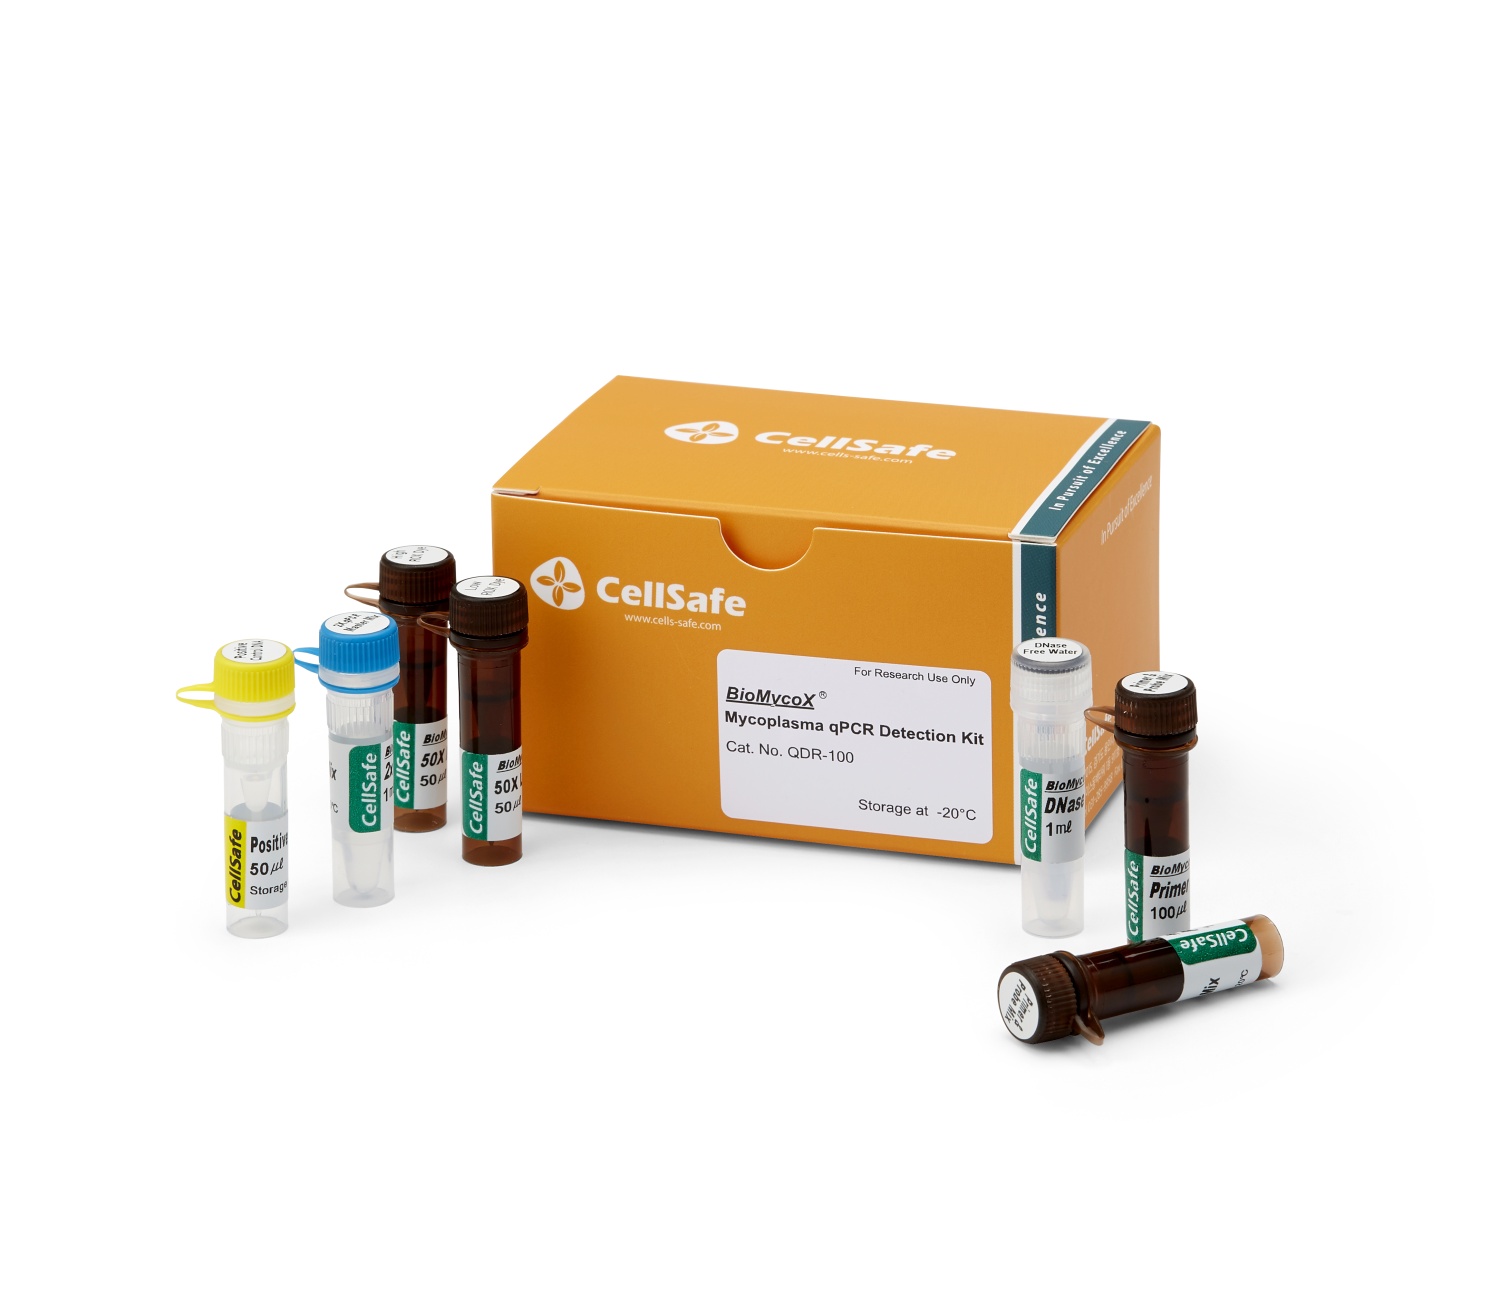 BioMycoX® Mycoplasma qPCR Detection Kit